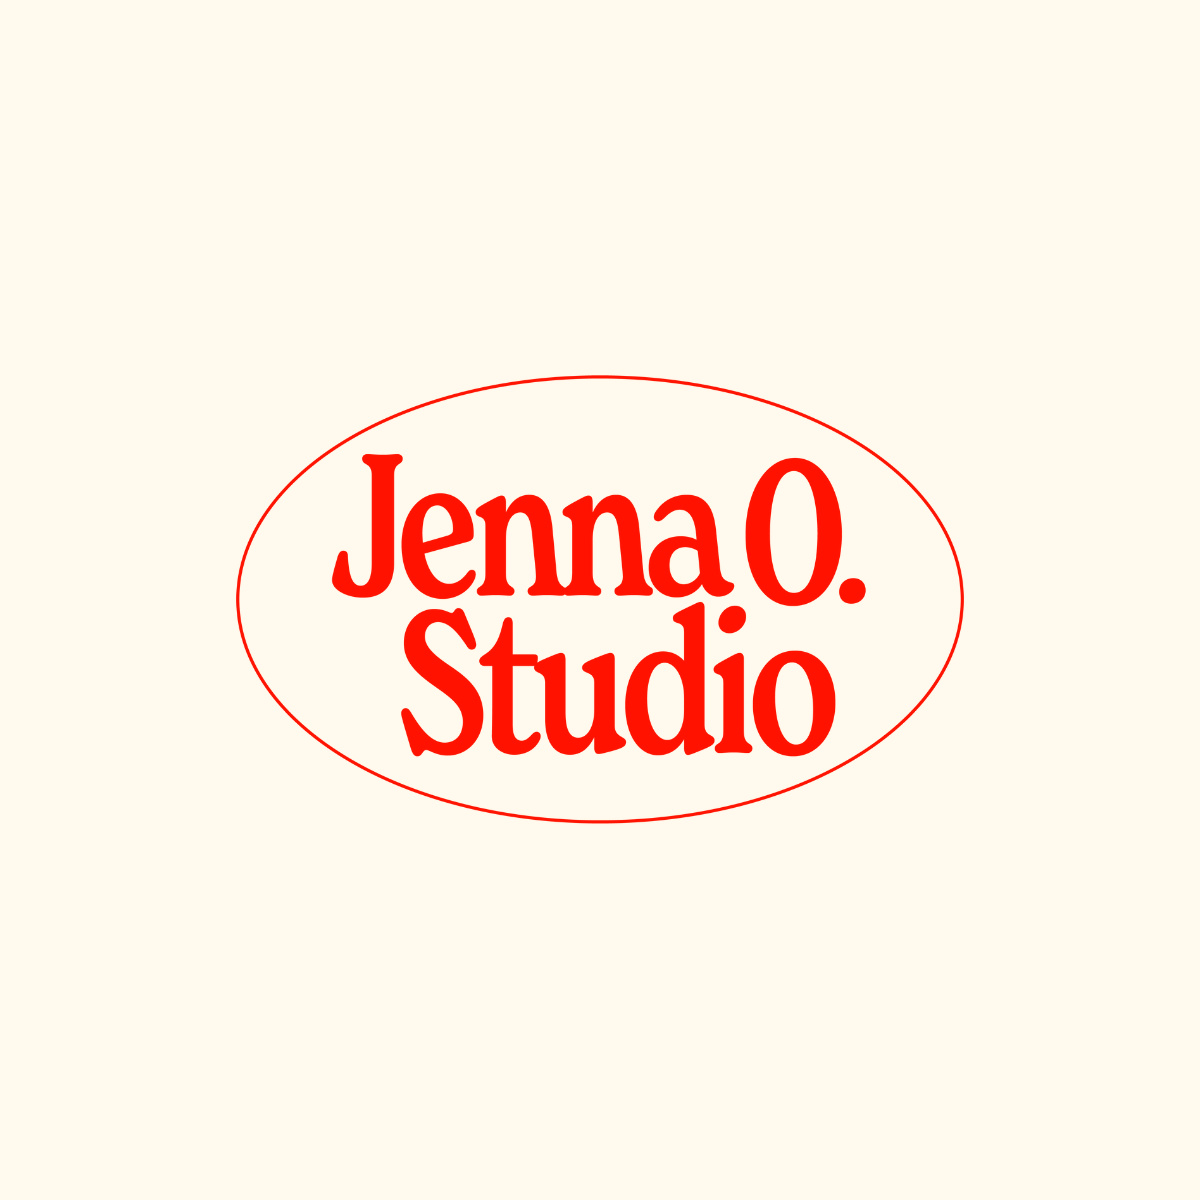 Cherries Print – Jenna O. Studio